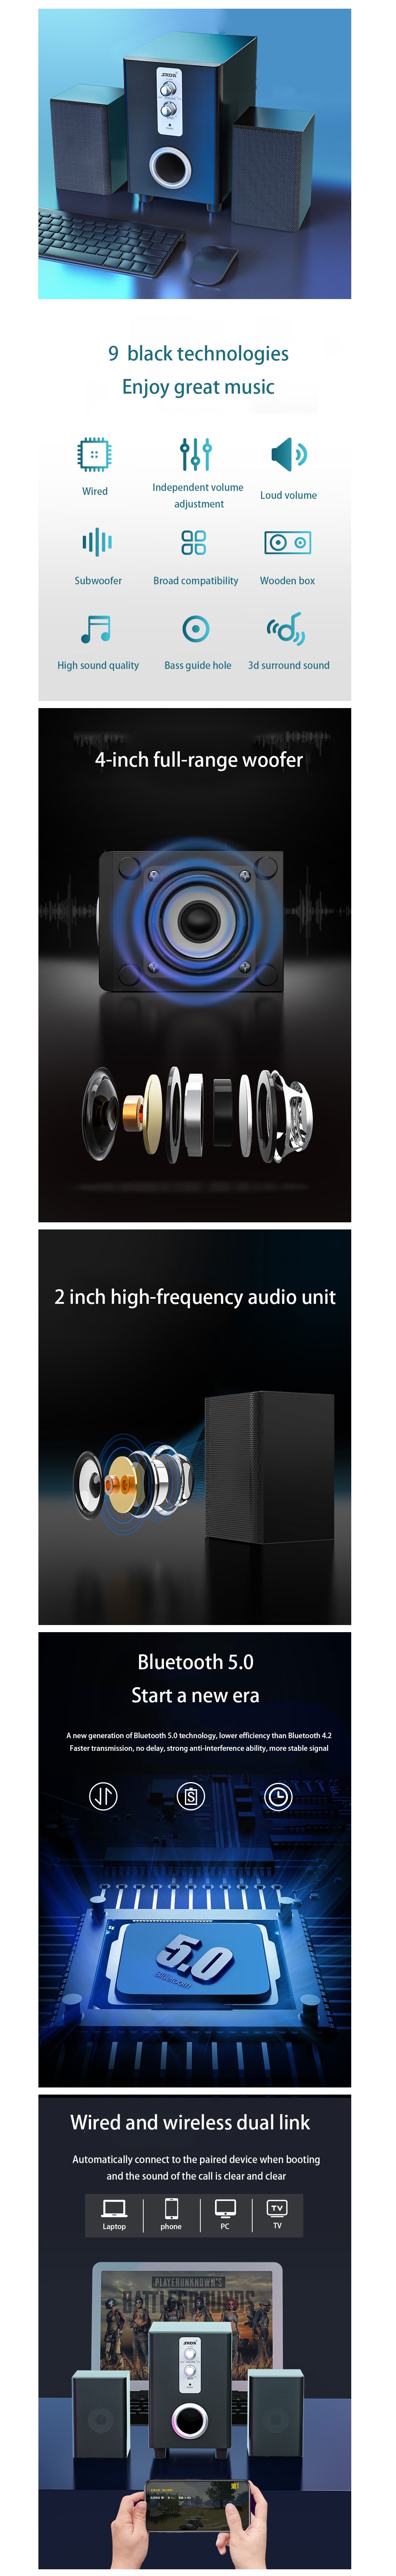 SADA-D-200T-Home-Laptop-Audio-Multimedia-Mini-Speaker-USB-AUX-Audio-21-Subwoofer-bluetooth50-Wired-3-1734800-1